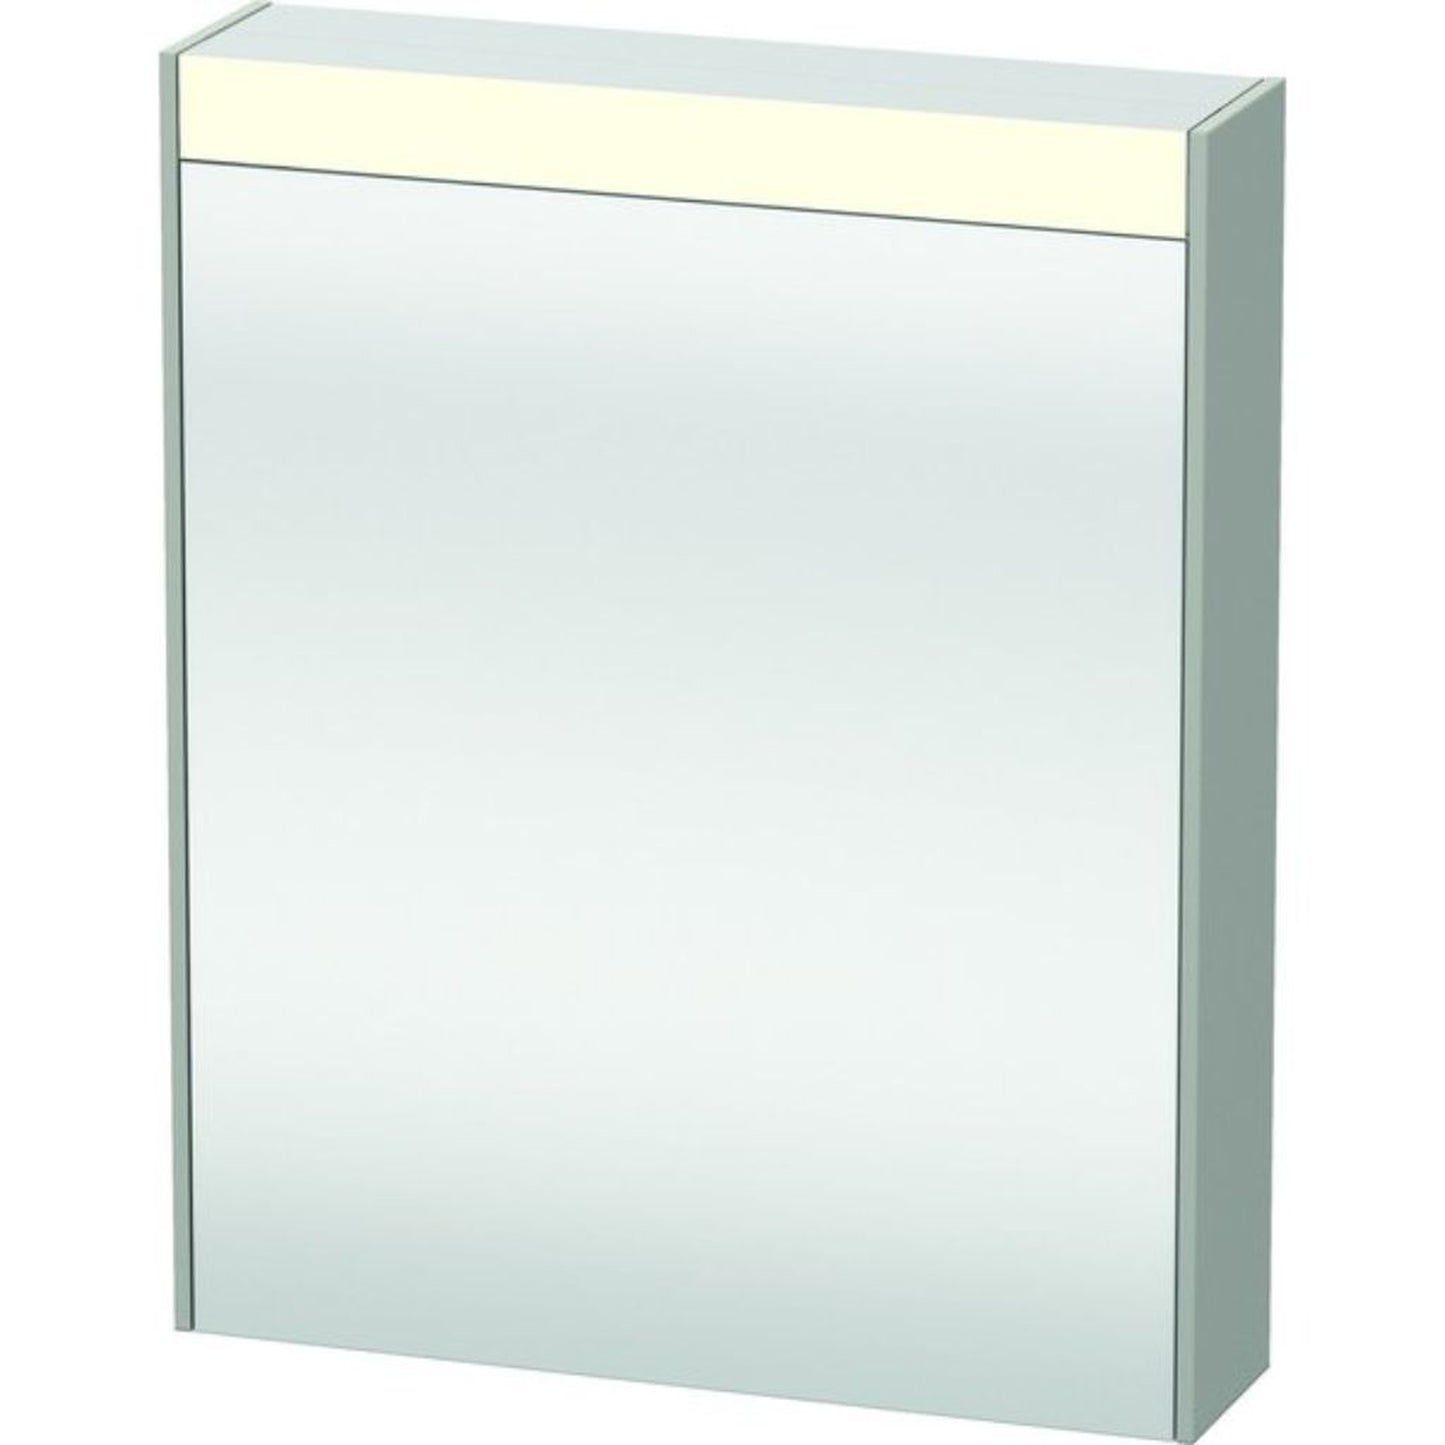 Duravit Brioso 24" x 30" x 6" Mirror With Left Hinge Cabinet and Lighting Concrete Grey Matt